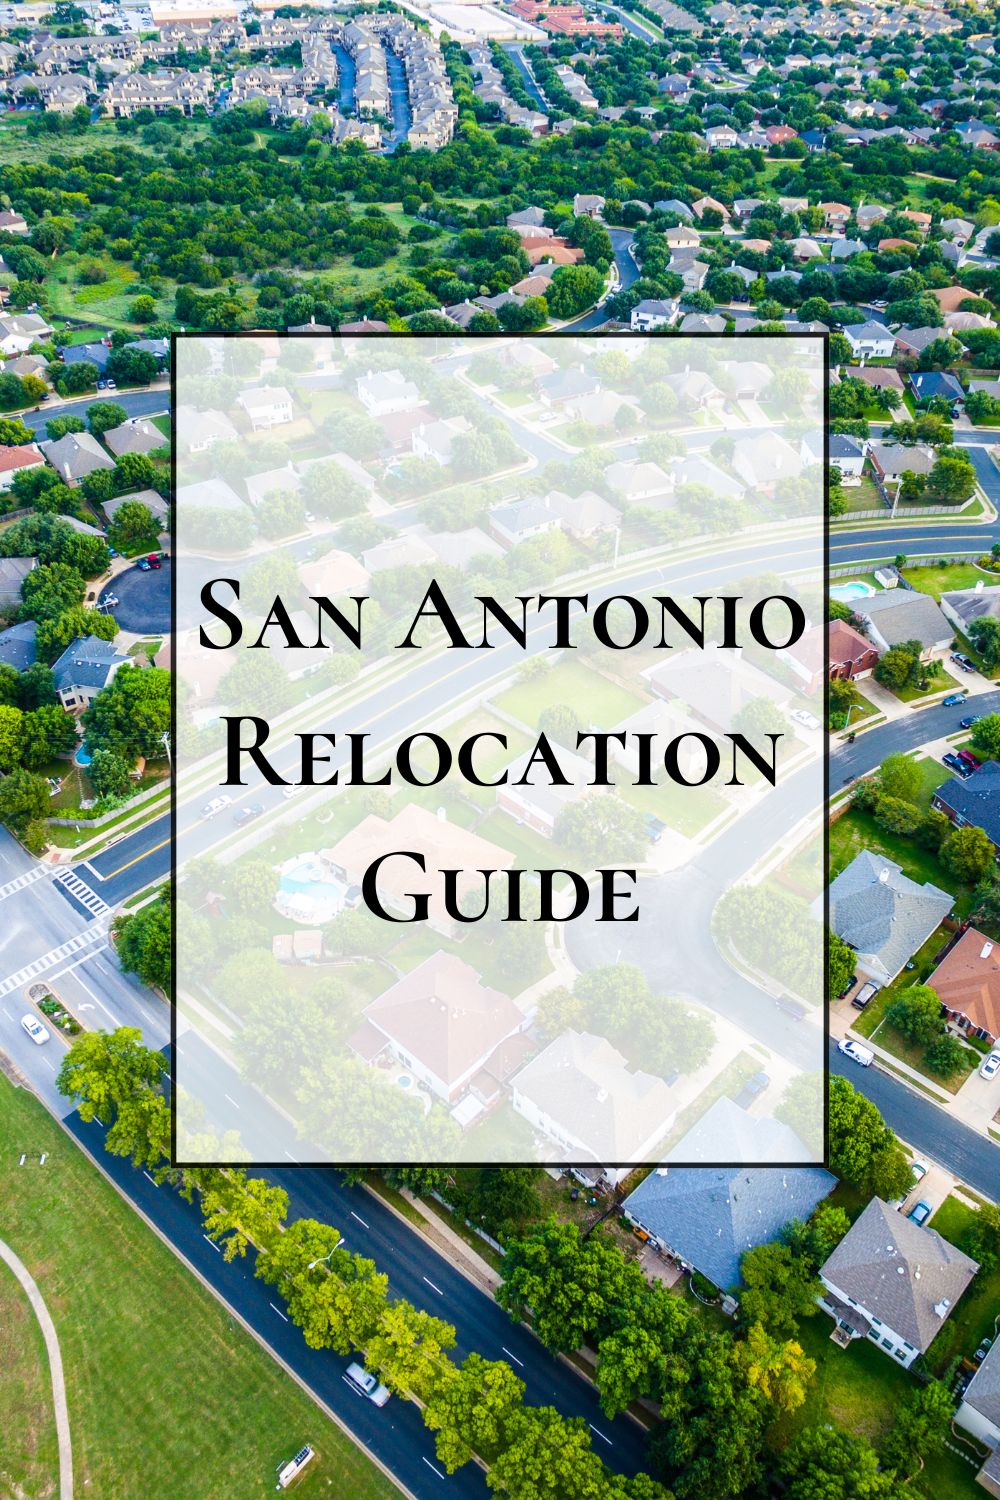 San antonio relocation guide, Tammy Dominguez - San Antonio realtor & relocation specialist